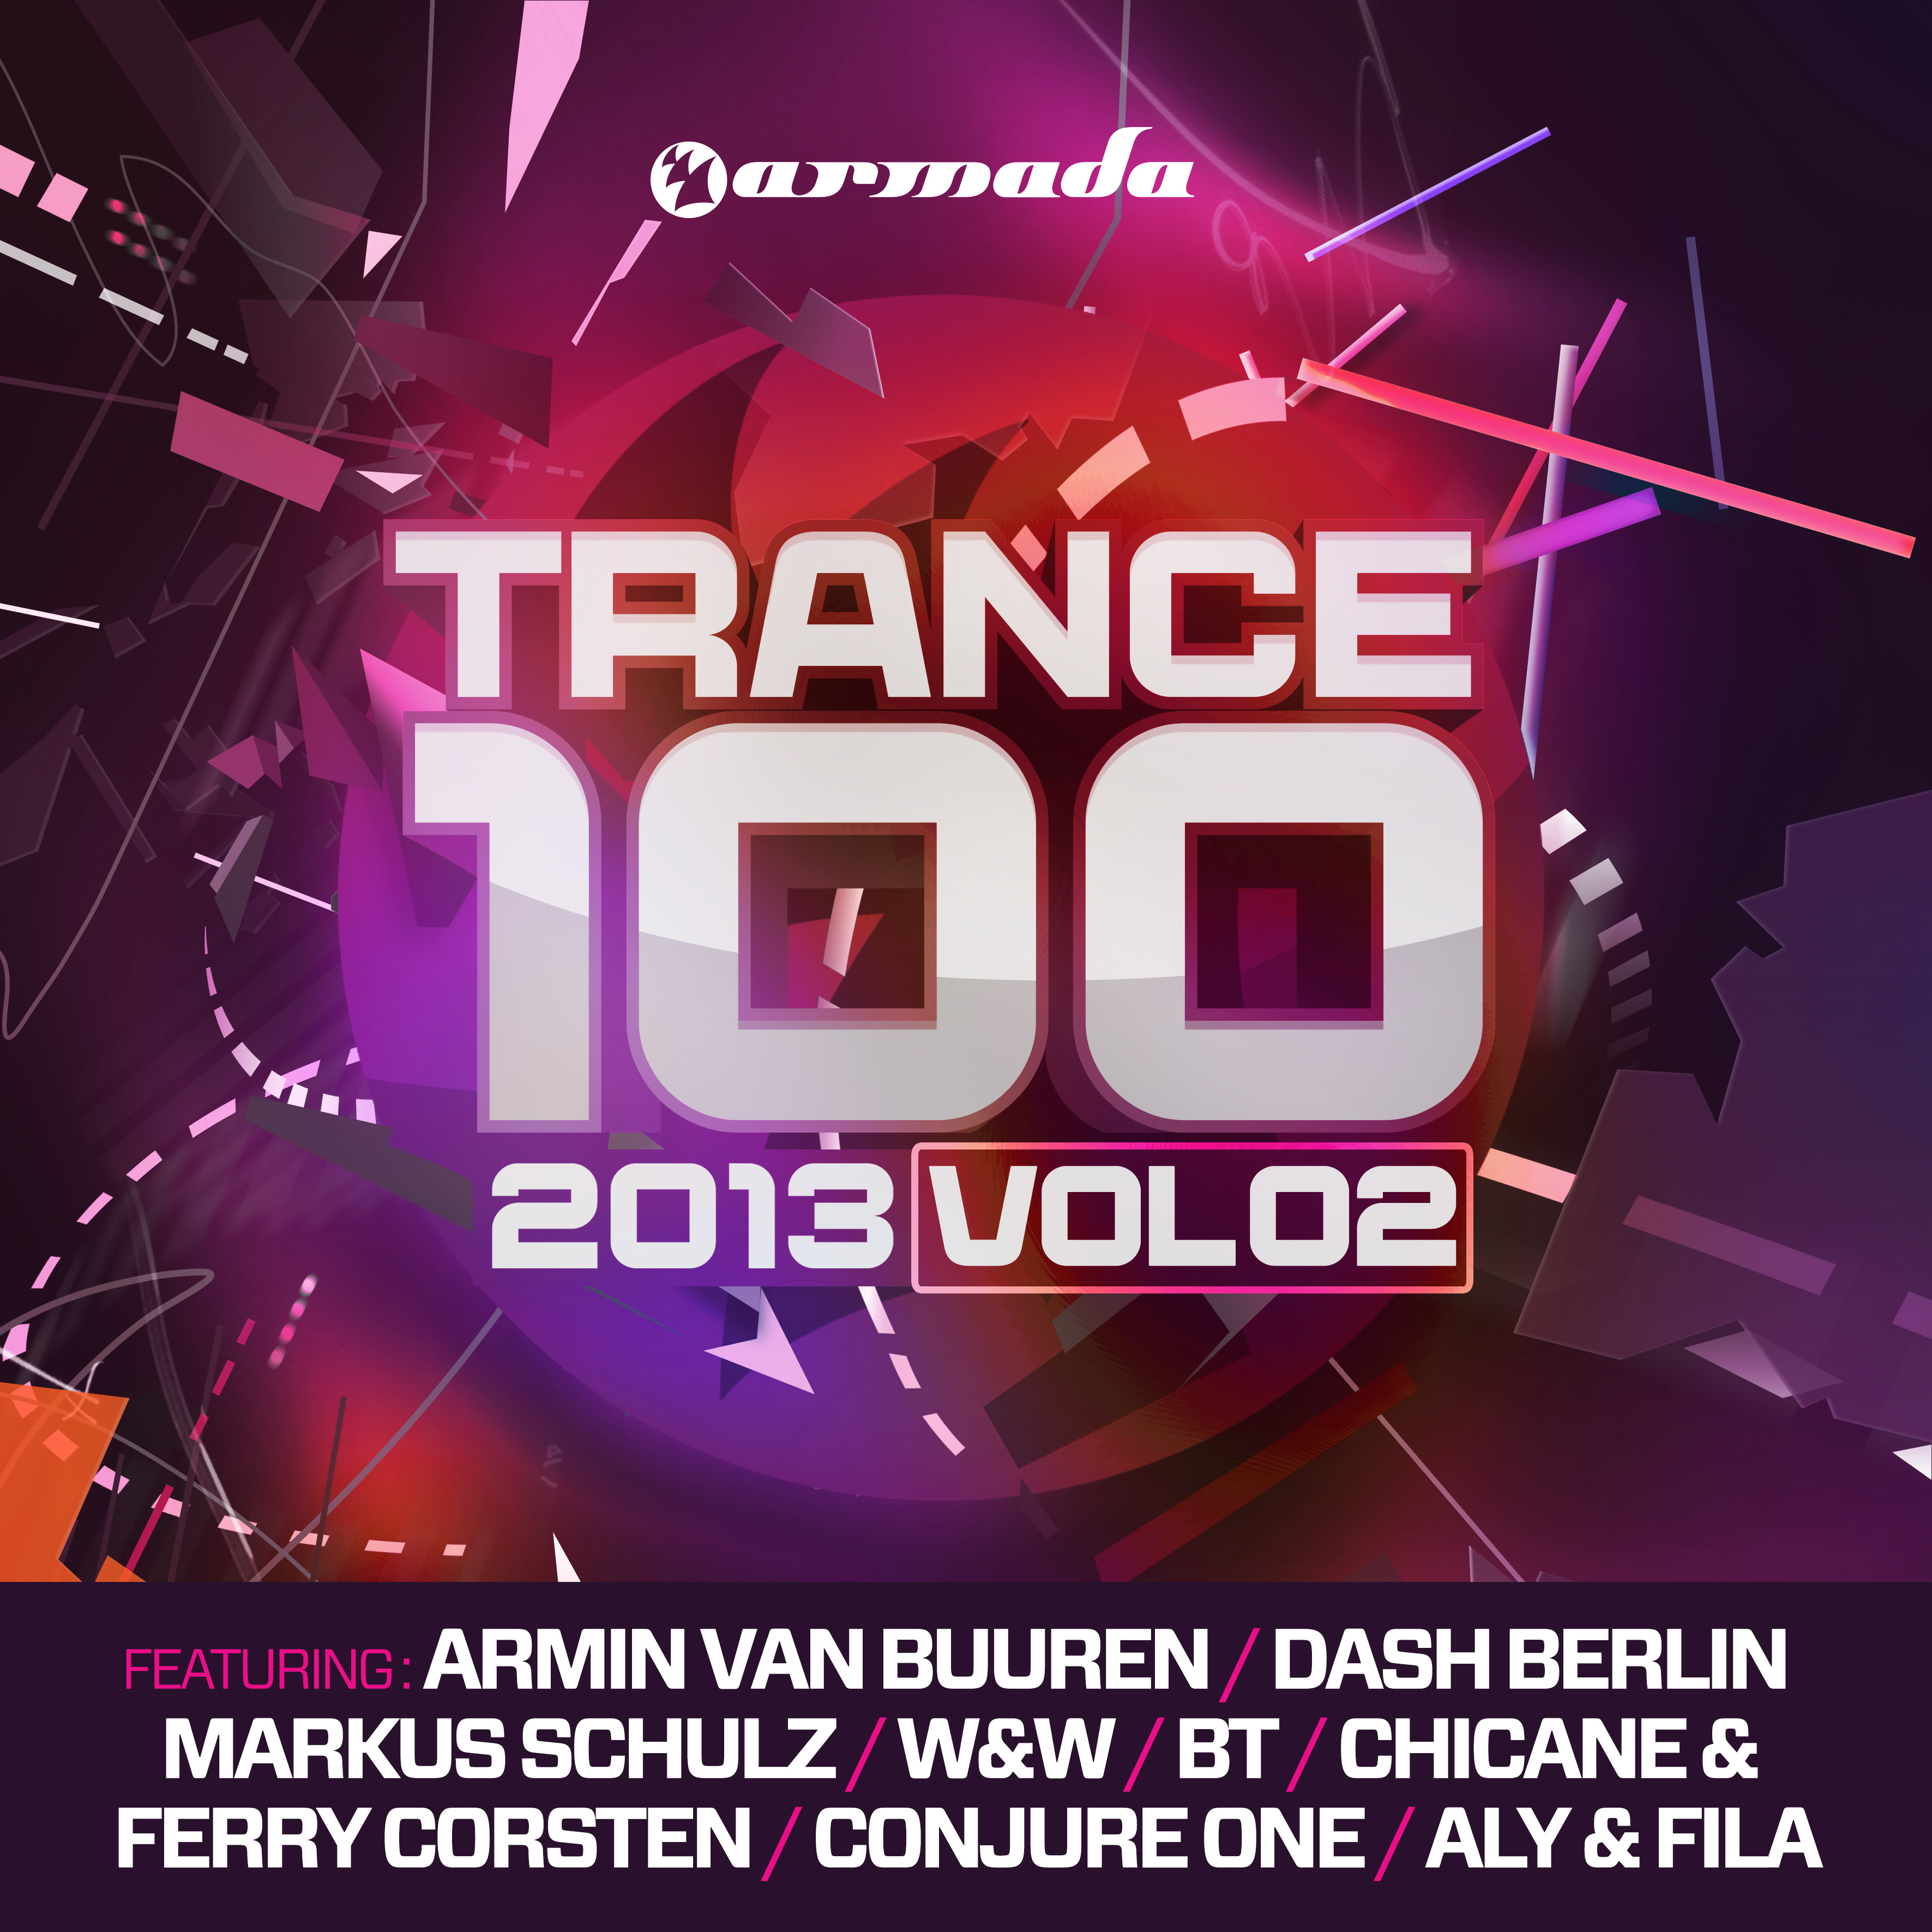 Trance 100 - 2013, Vol. 2 (Mixed Version)